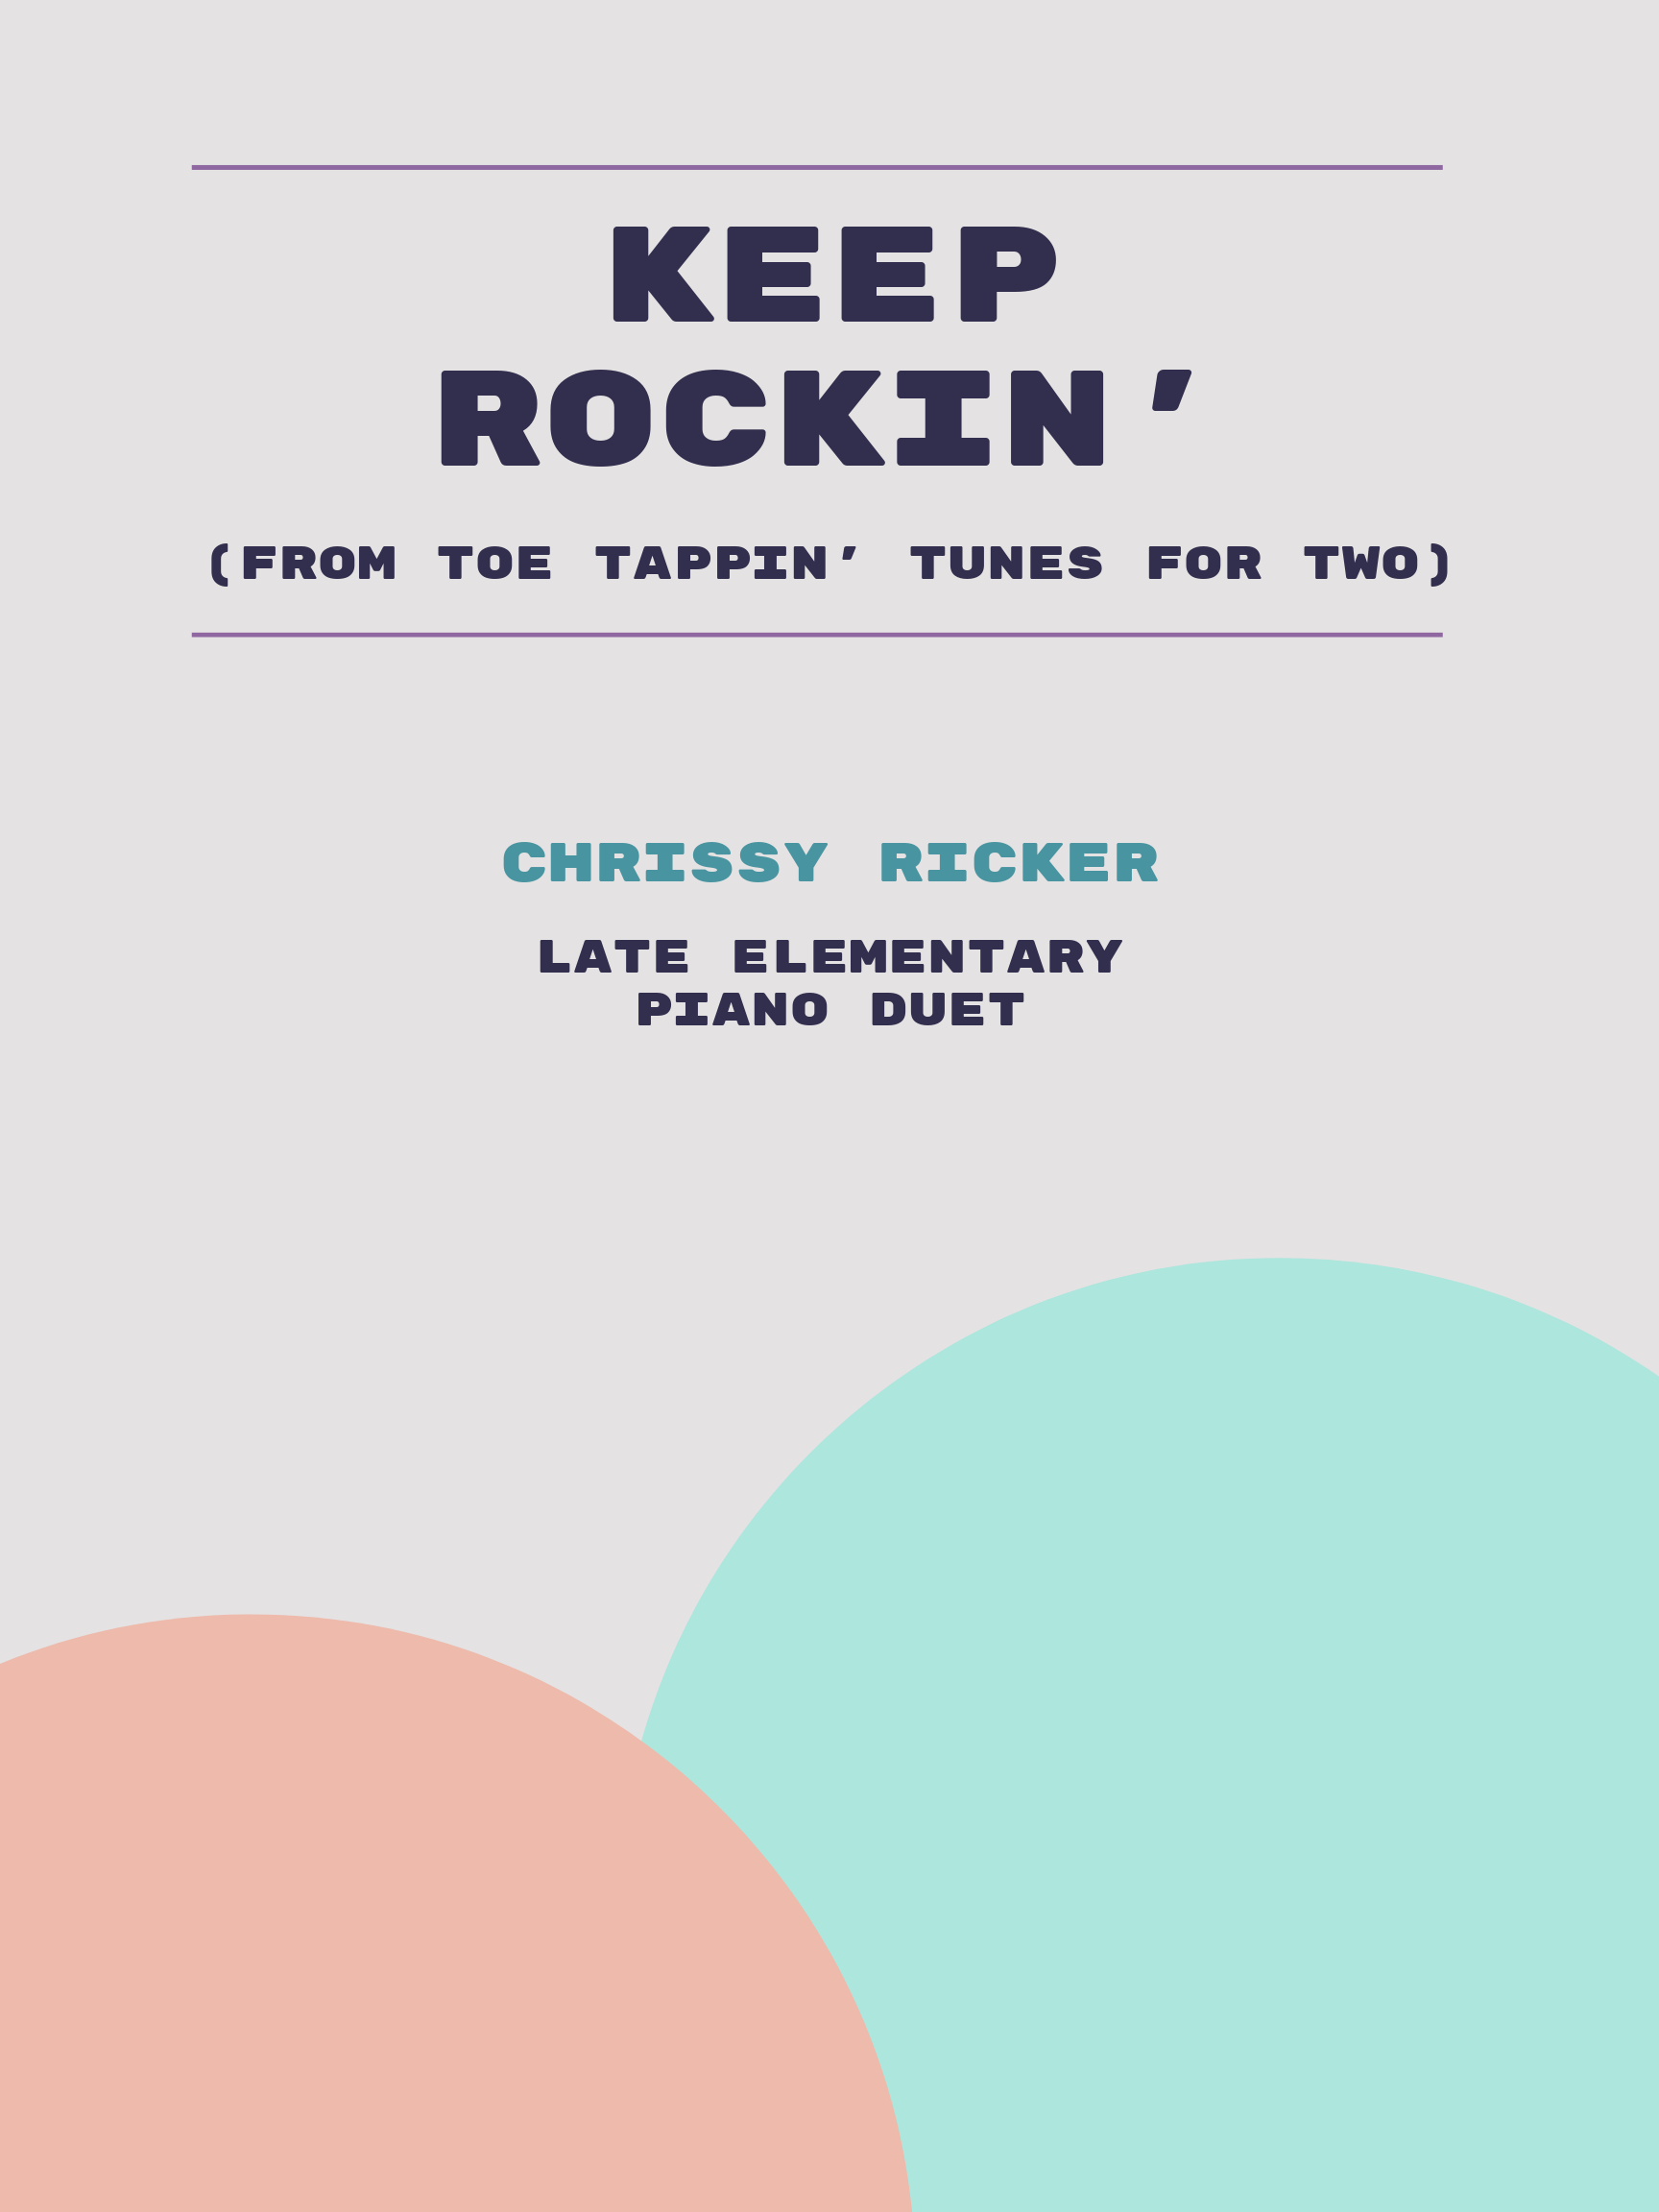 Keep Rockin' by Chrissy Ricker